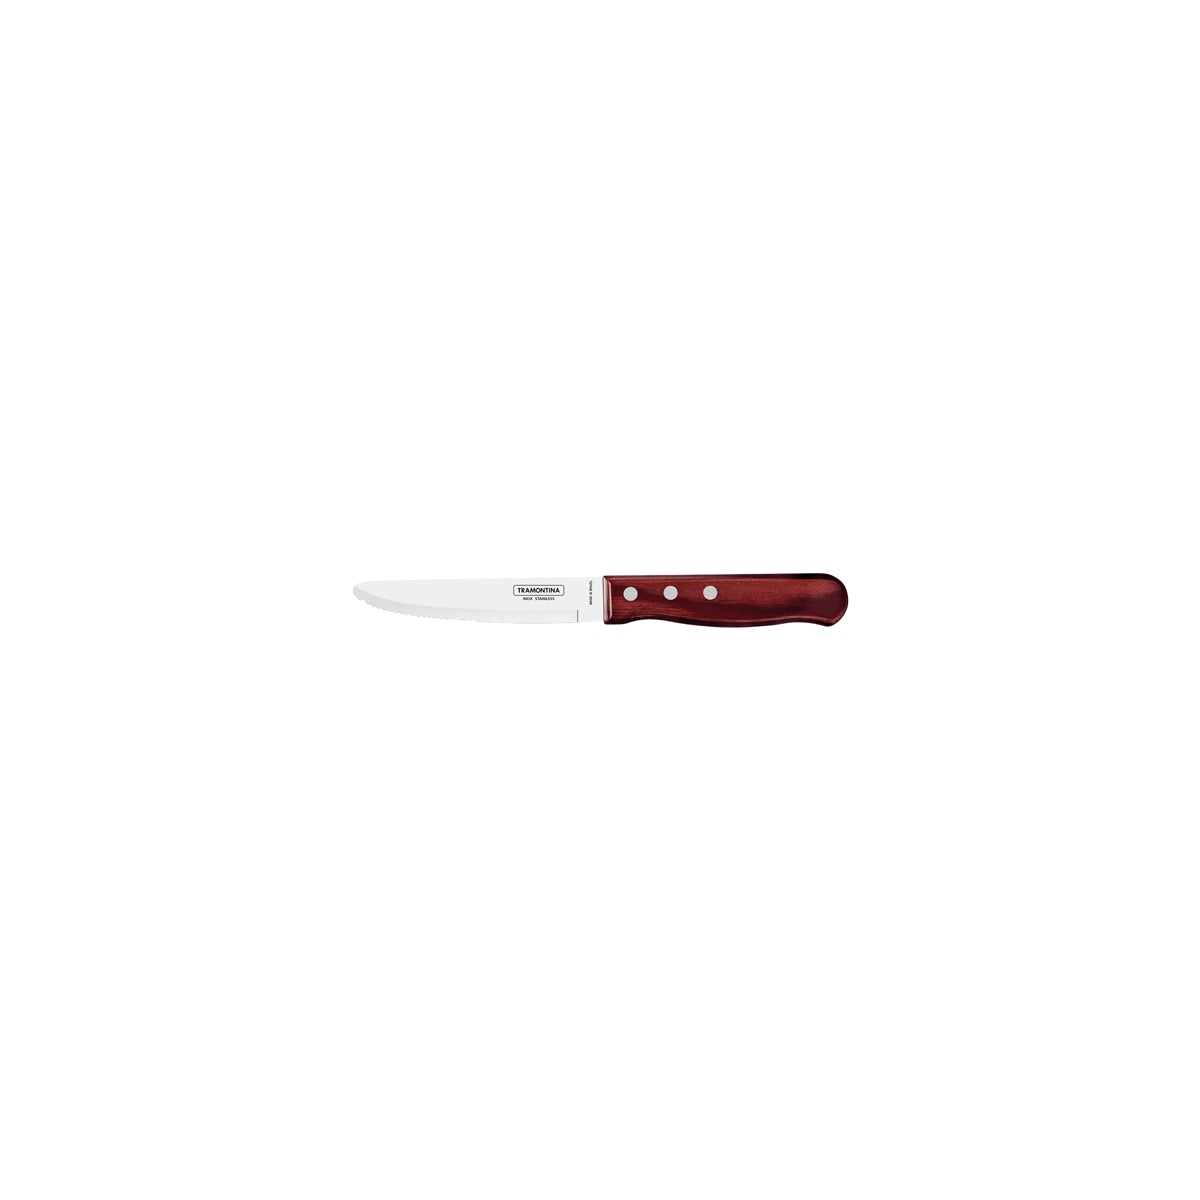 TM21115/075 Tramontina Churrasco Steak Knife Serrated Wide Blade with Polywood Handle Red 127mm Tomkin Australia Hospitality Supplies